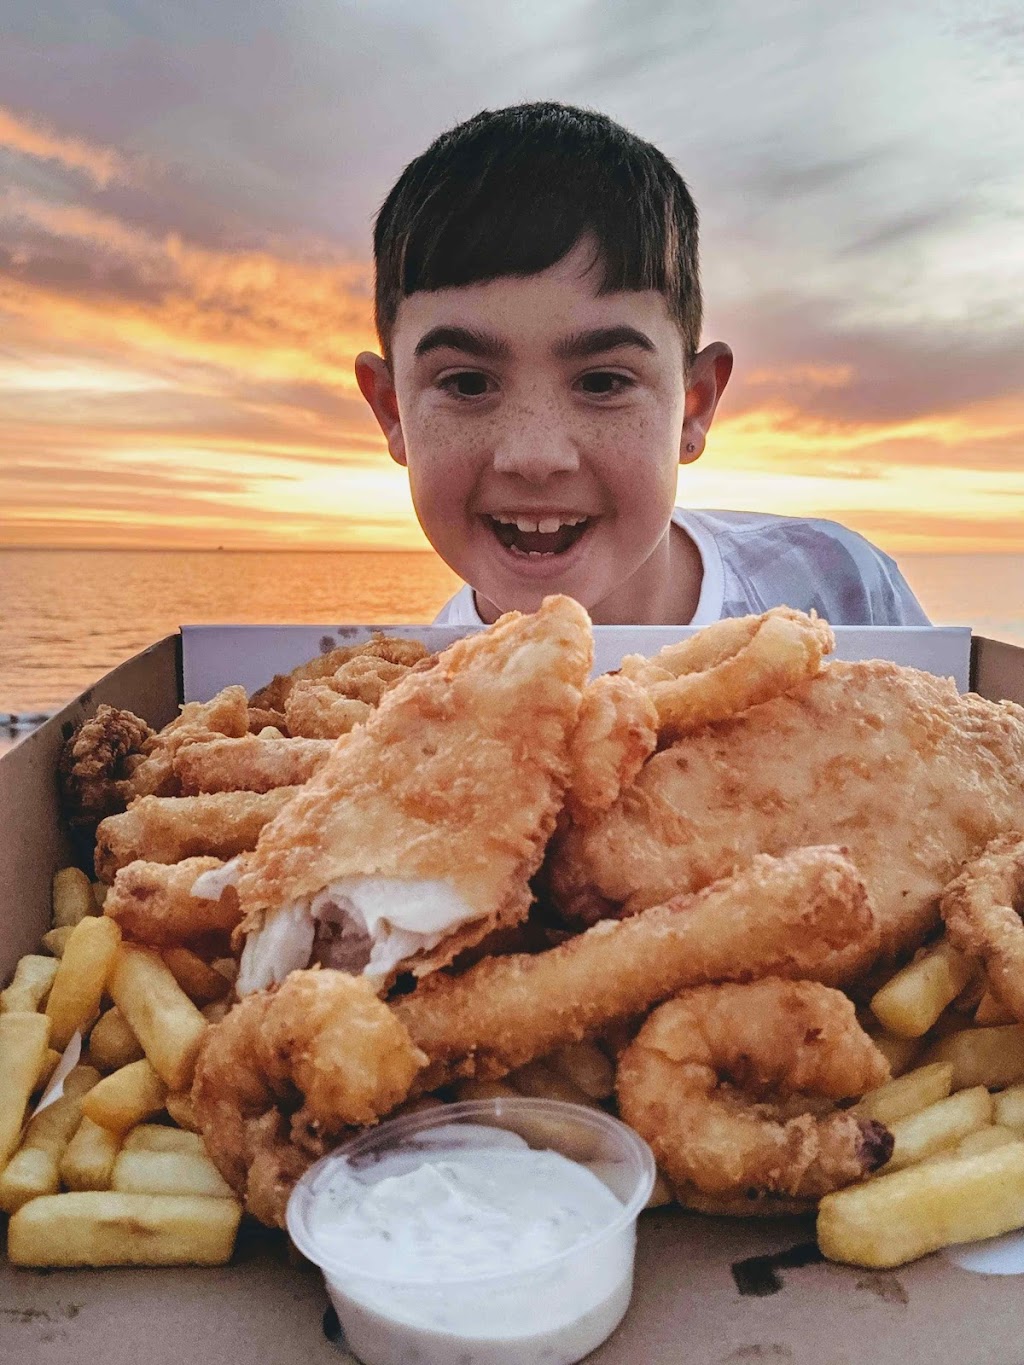 Ocean View Fish and Chips | meal takeaway | 51/366 Grand Promenade, Dianella WA 6059, Australia | 0412147147 OR +61 412 147 147